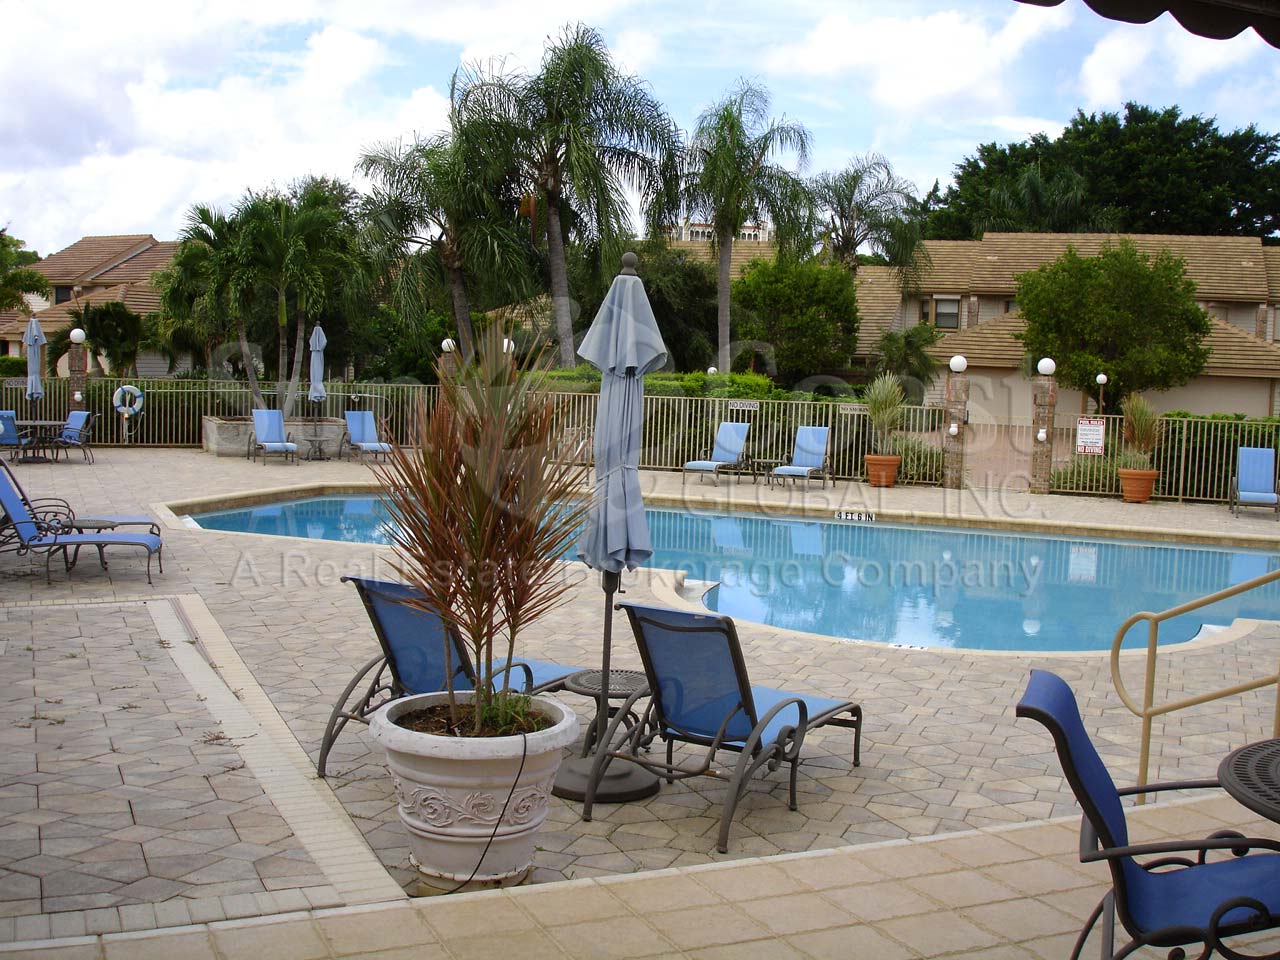 Villas Community Pool and Sun Deck Furnishings